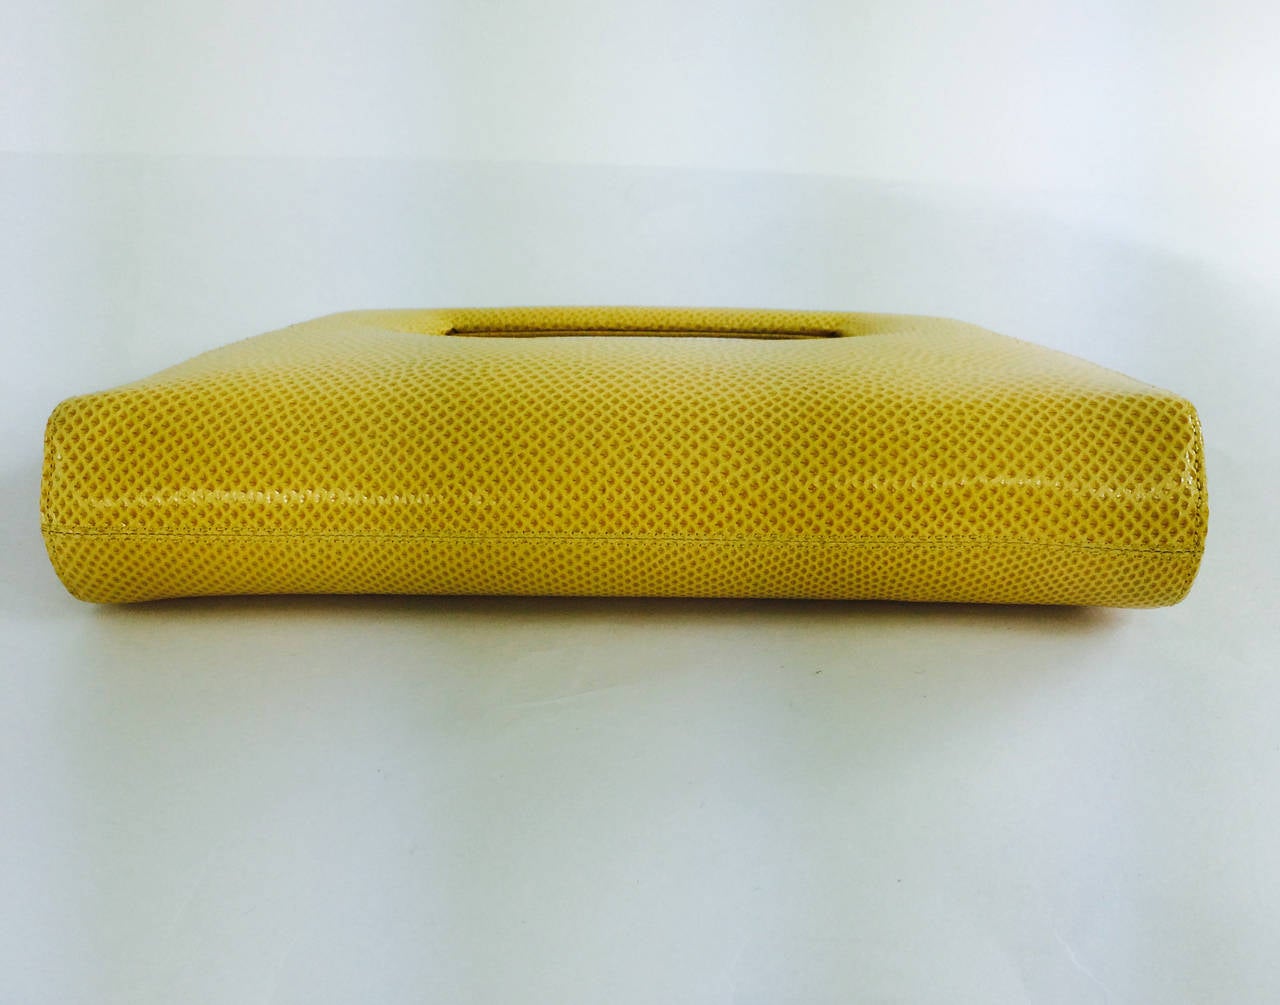 Judith Leiber yellow karung structured handle clutch handbag 1